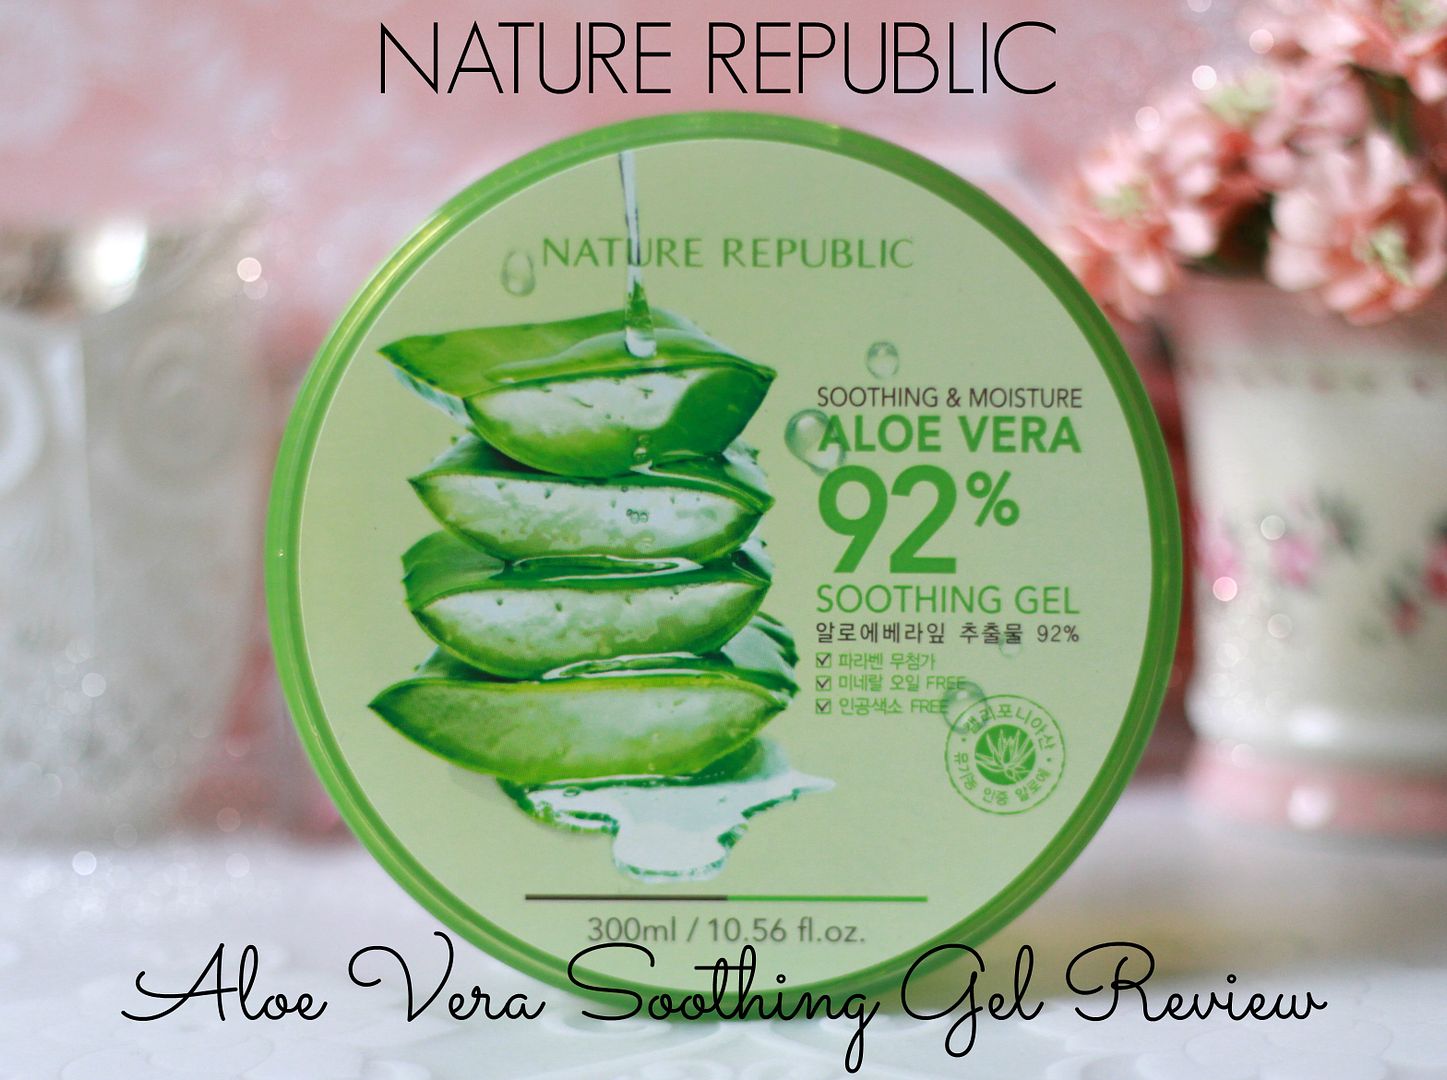 Aloe Vera body Gel nature Republic. Organia Aloe Vera Soothing Gel 92%. Алоэ шайба nature Republic. Nature Republic баннер. Soothing gel перевод